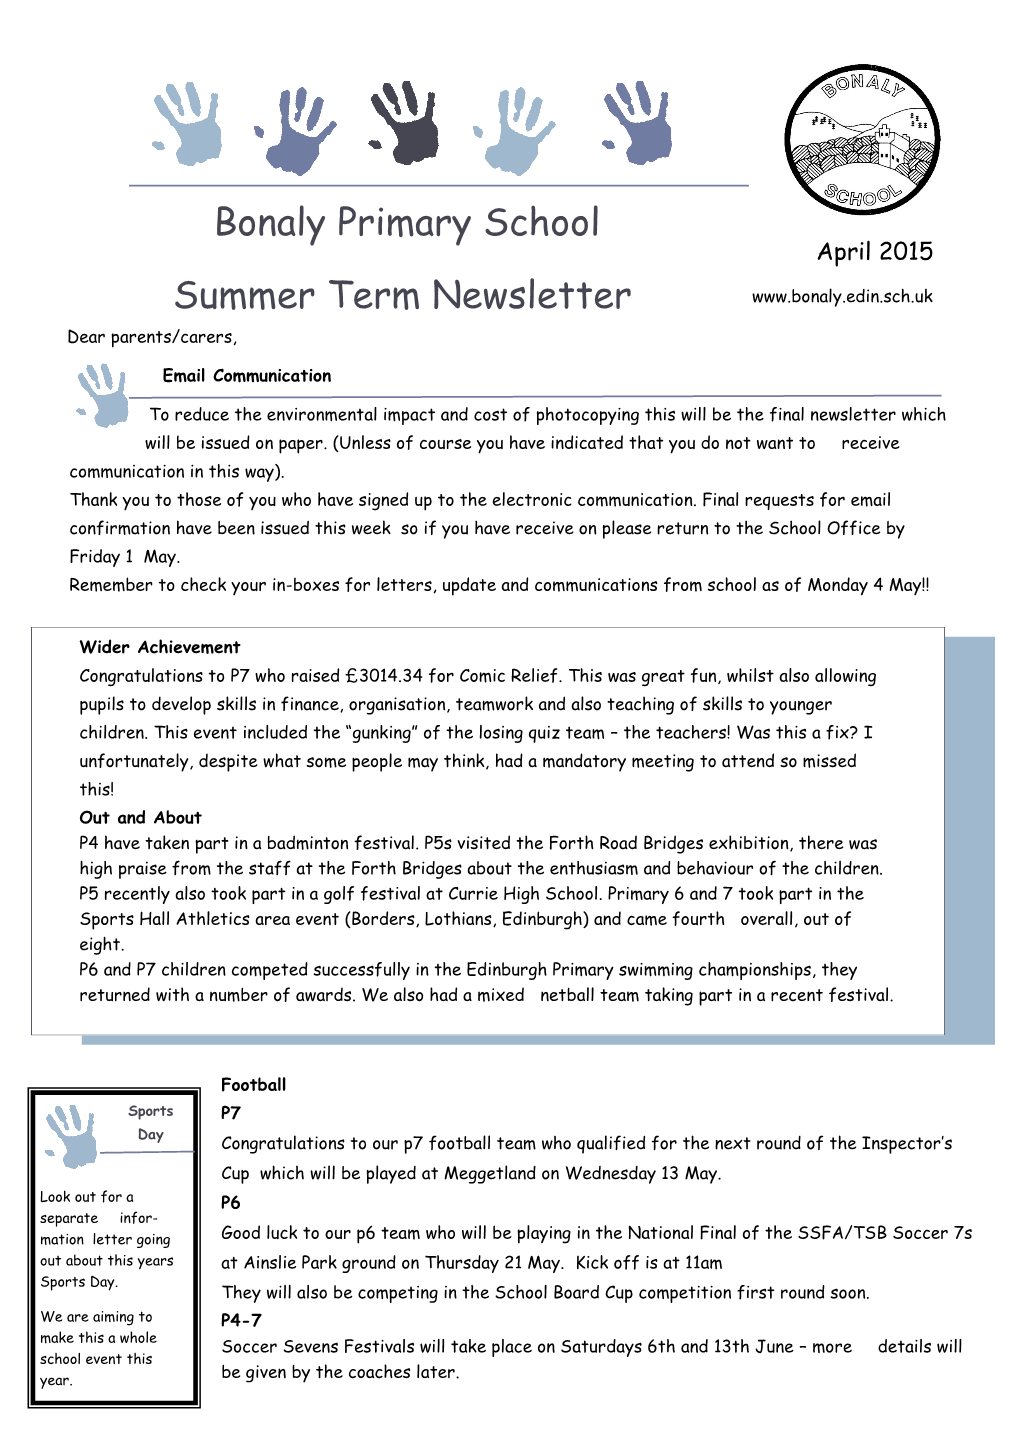 Bonaly Primary School Summer Term Newsletter